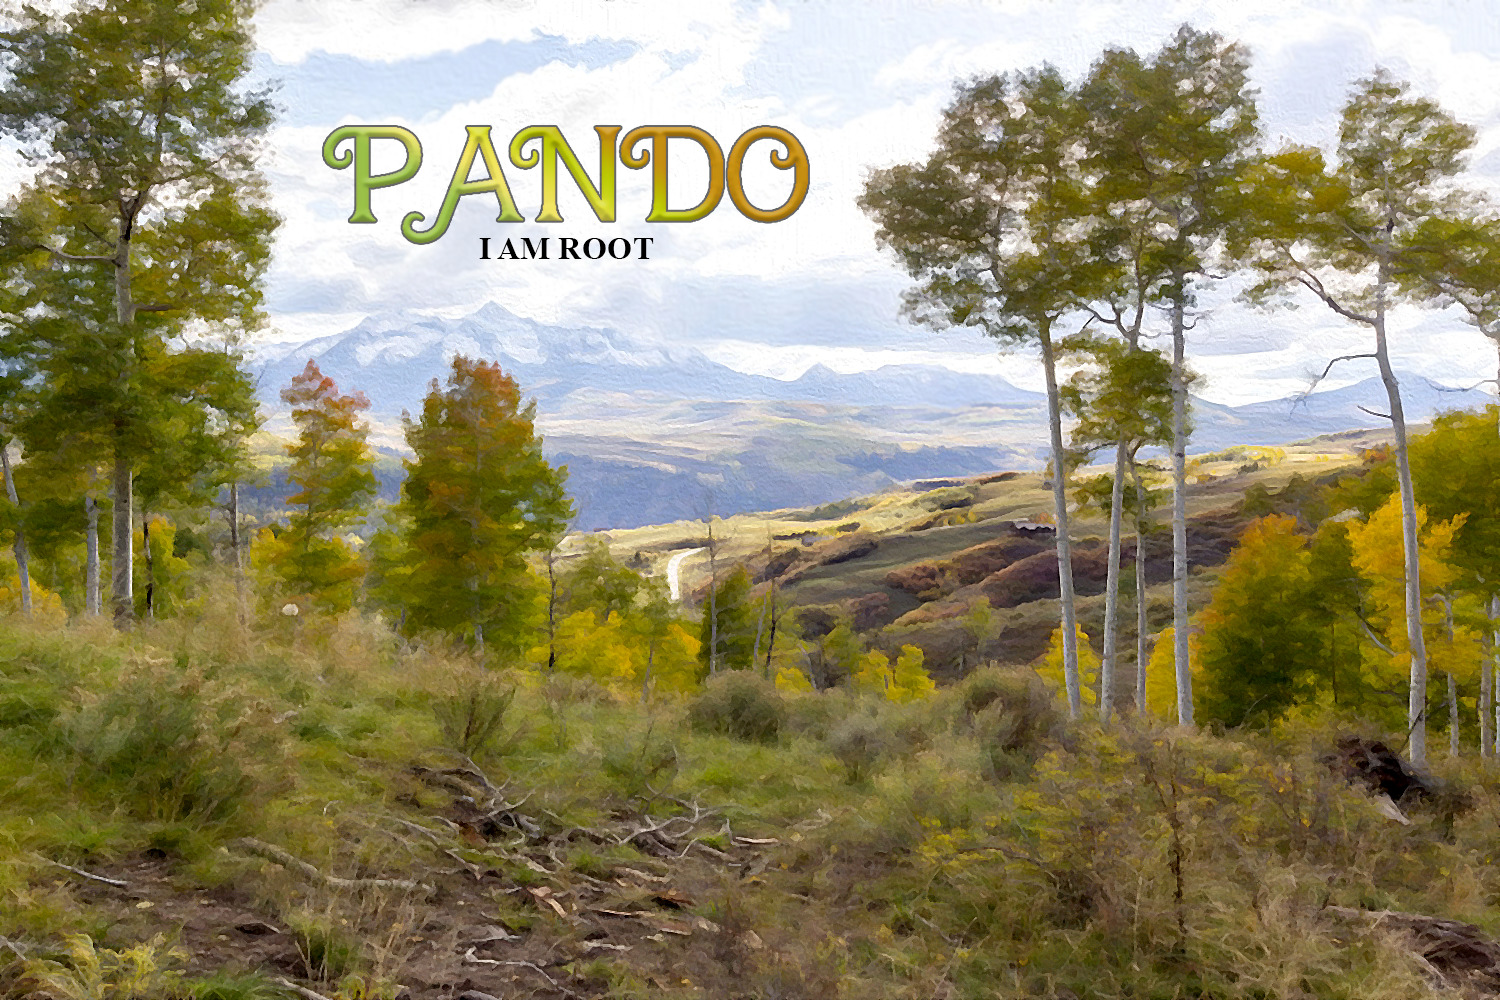 Pando - I am root